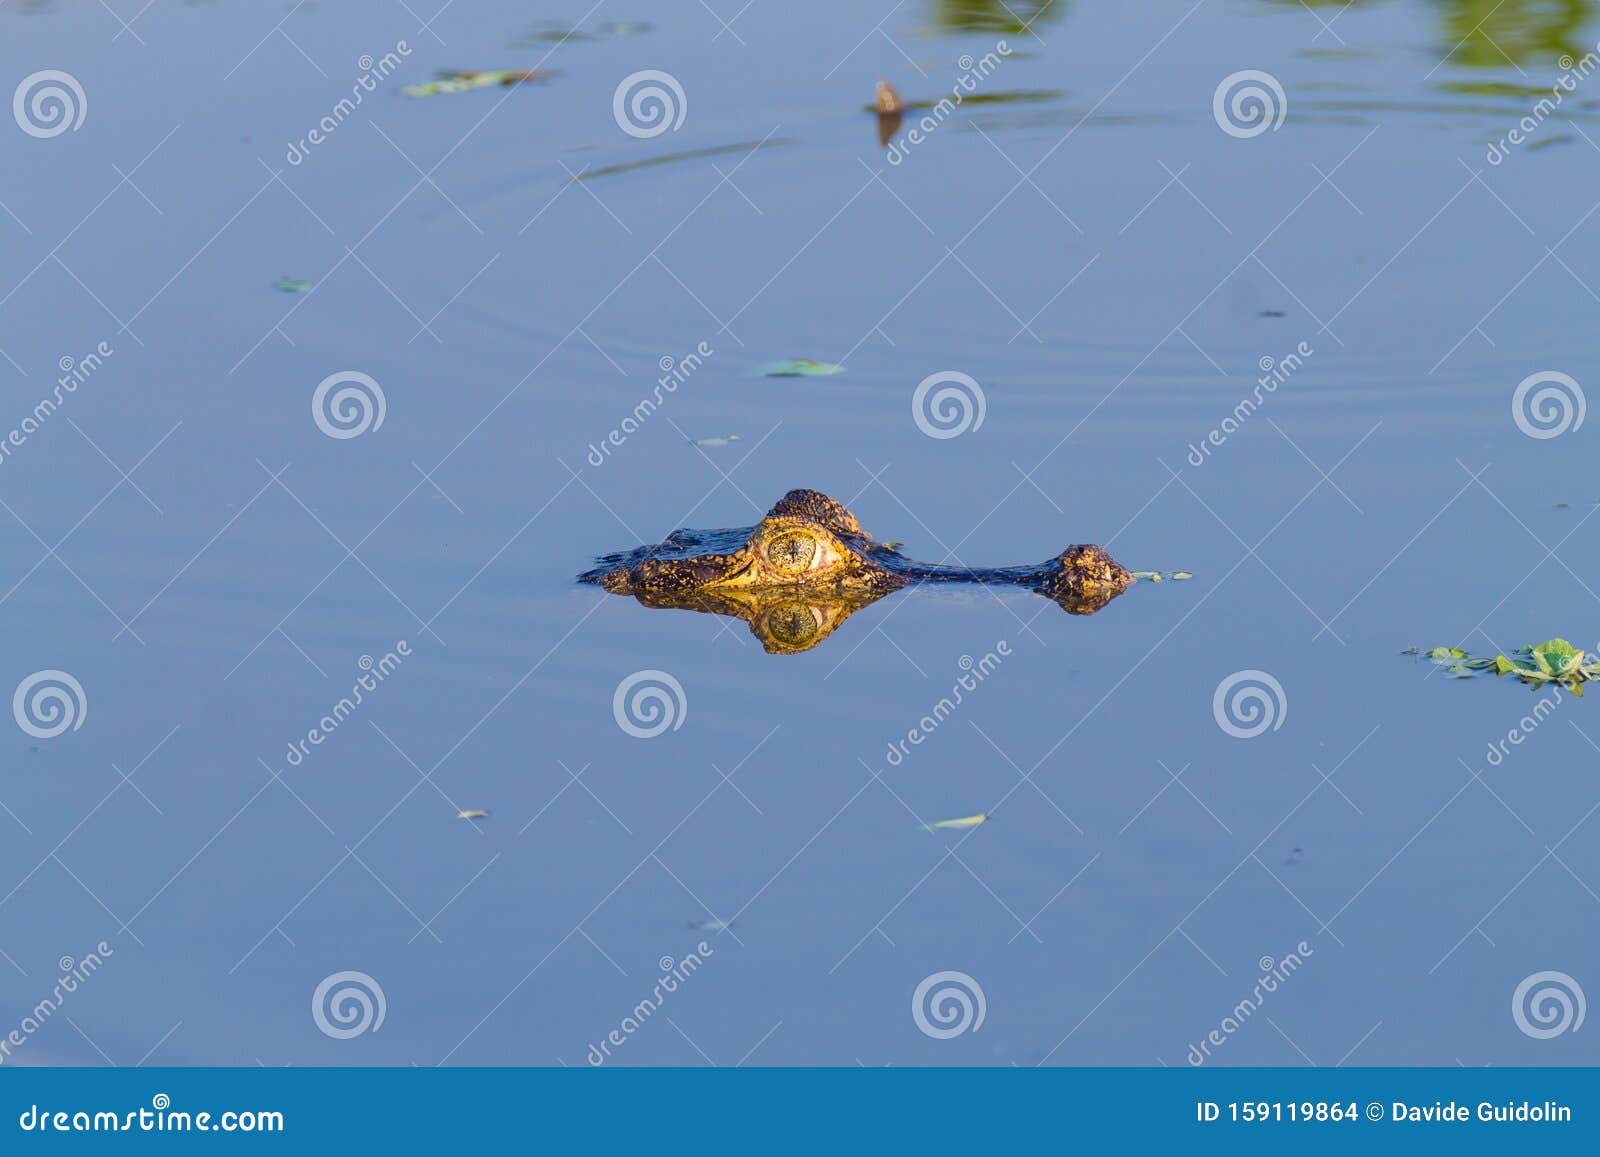 caiman floating on pantanal, brazil